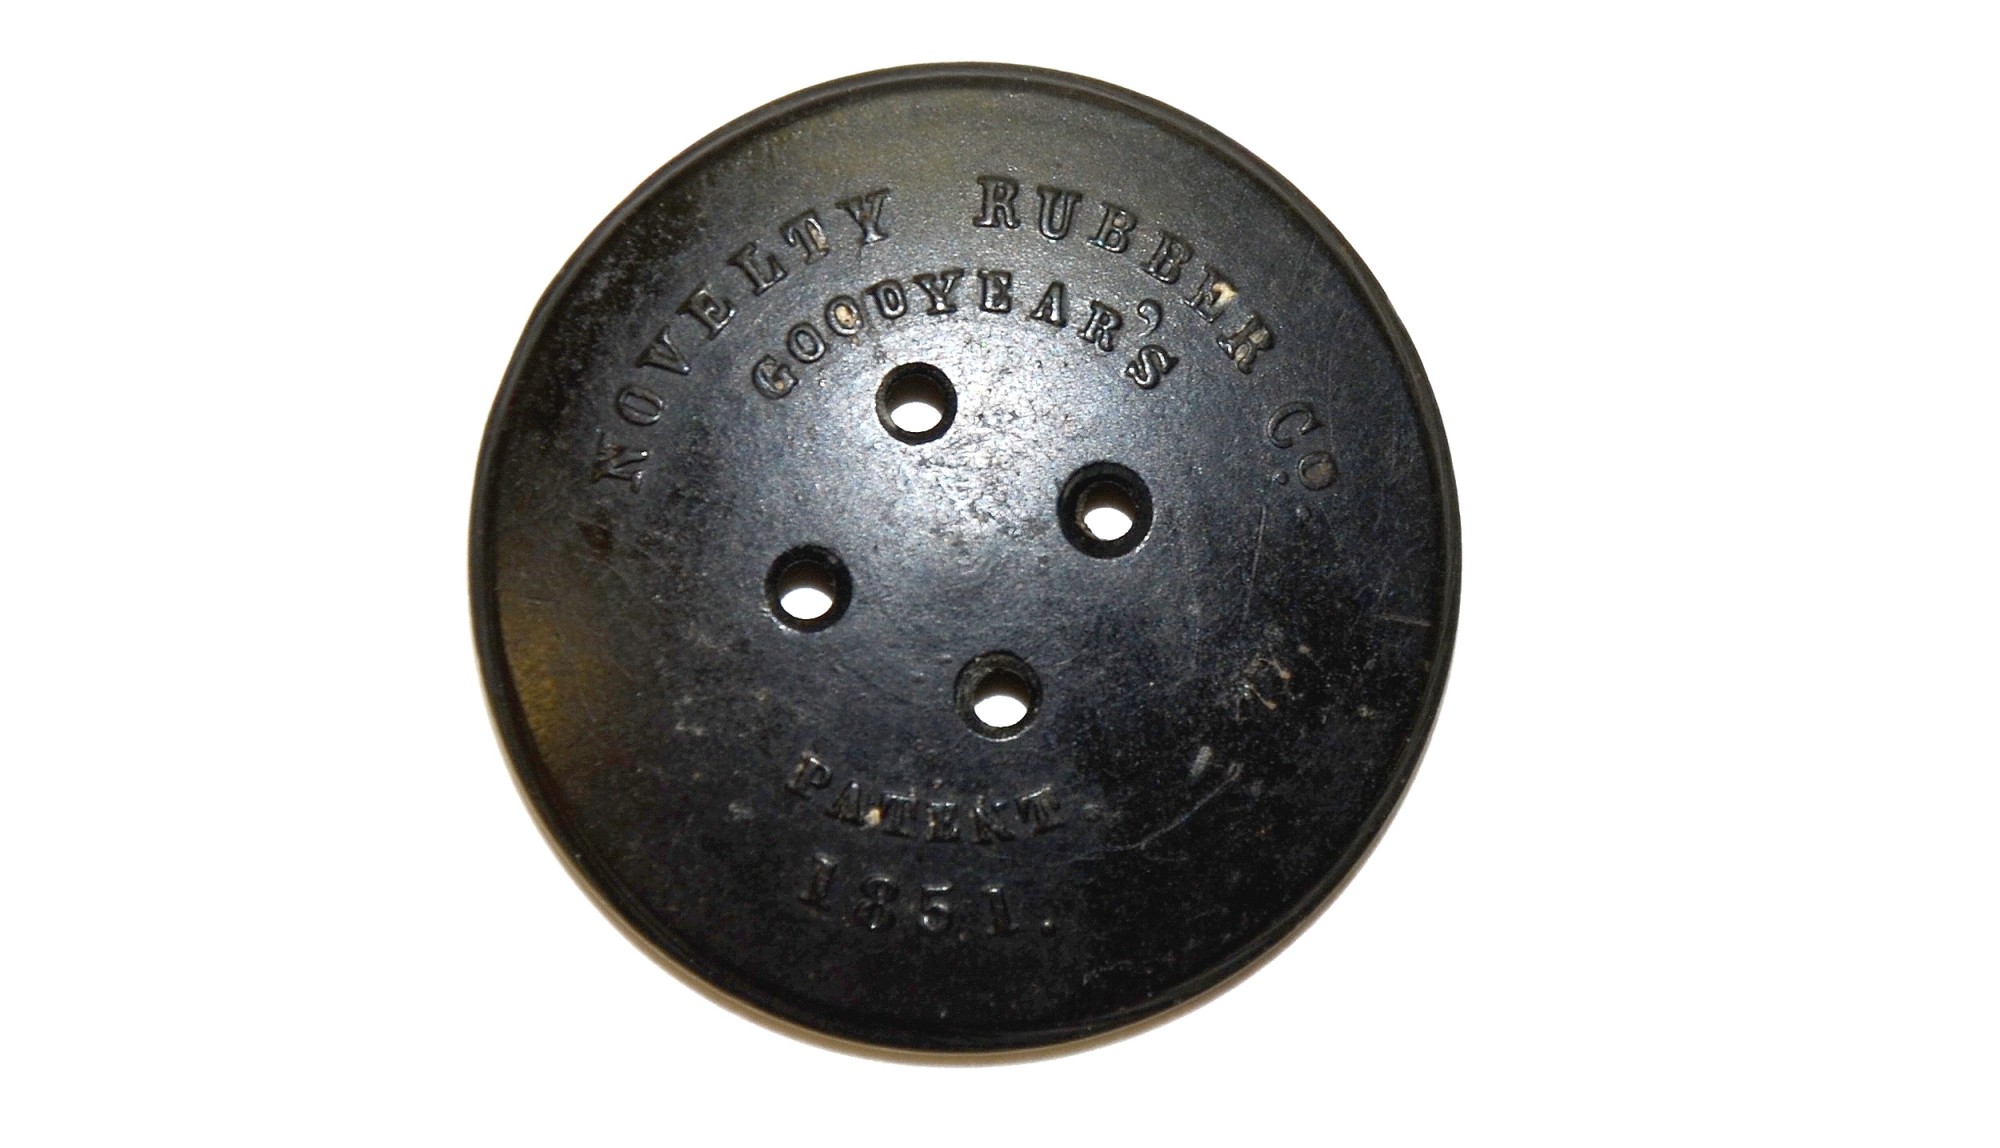 civil war navy buttons metal detecting